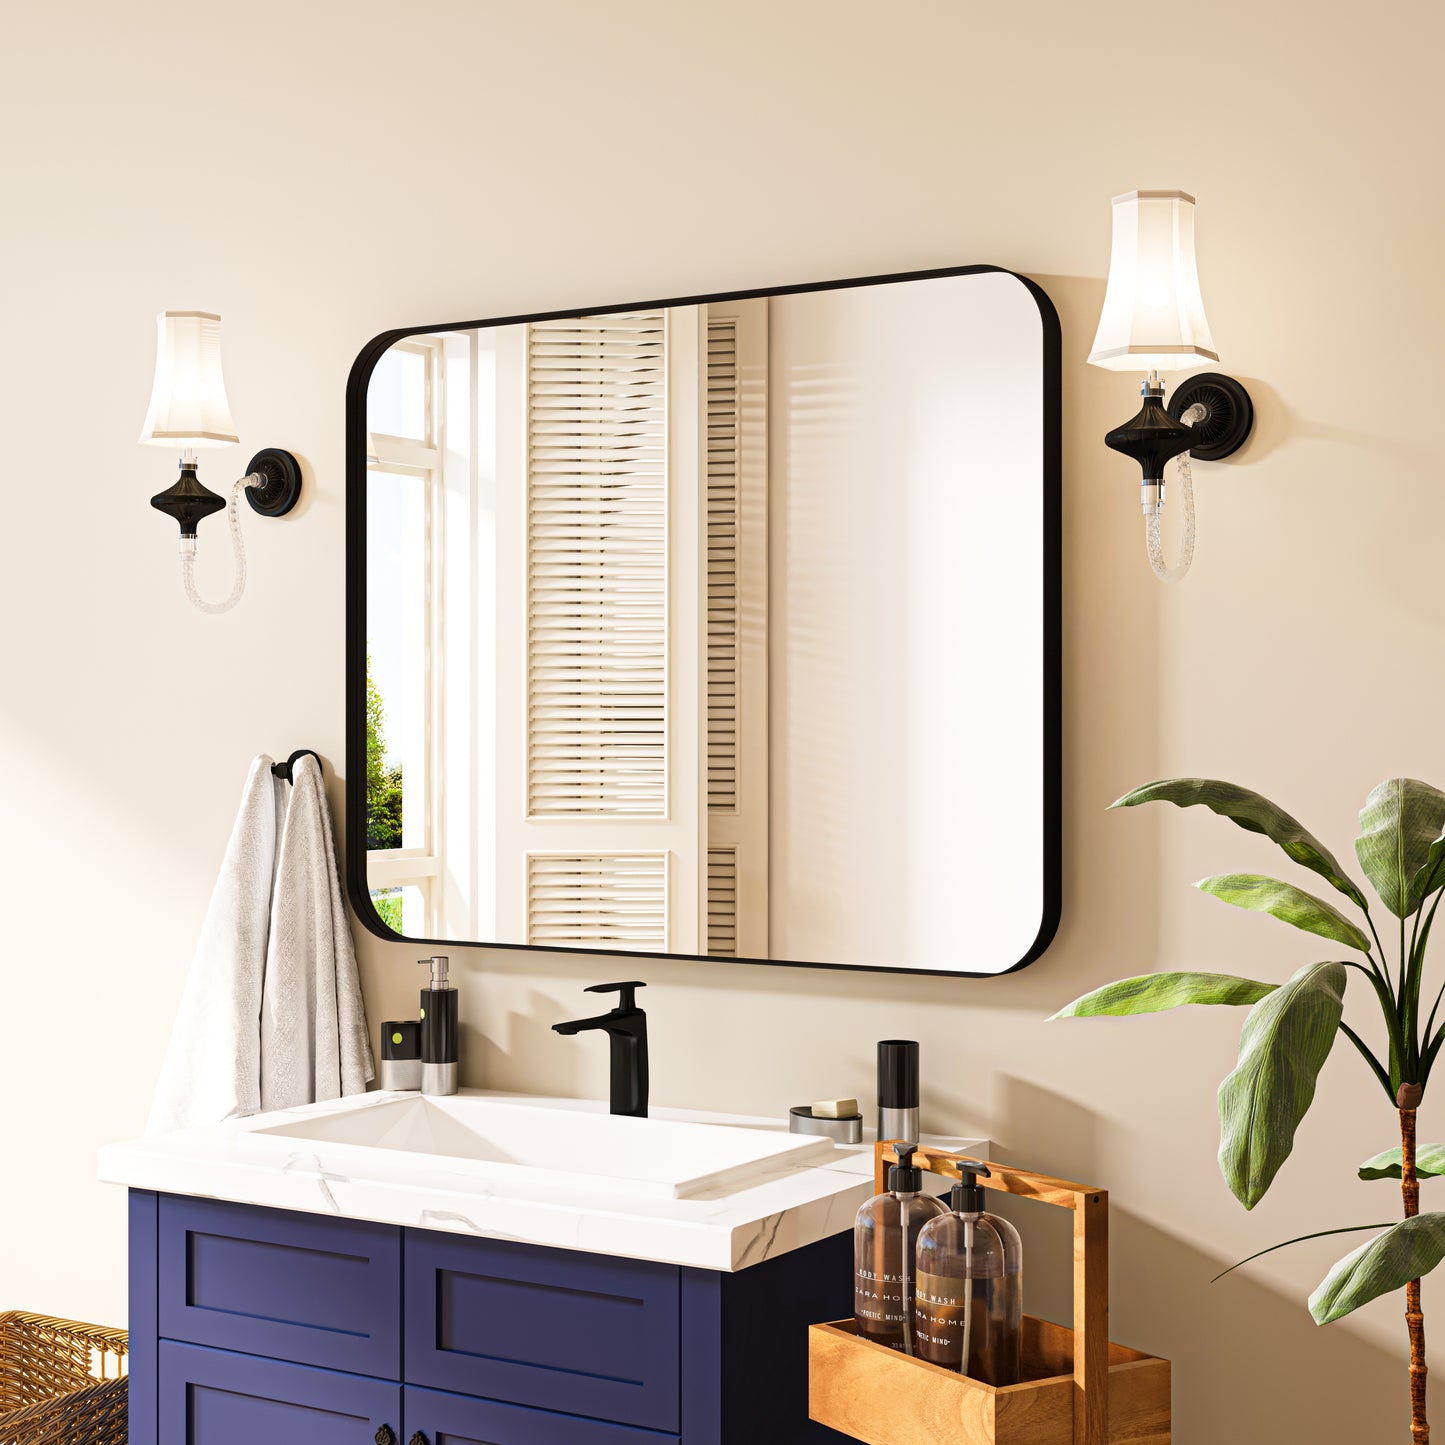 Waterpar® 40 in. W x 30 in. H Rectangular Aluminum Framed Wall Bathroom Vanity Mirror